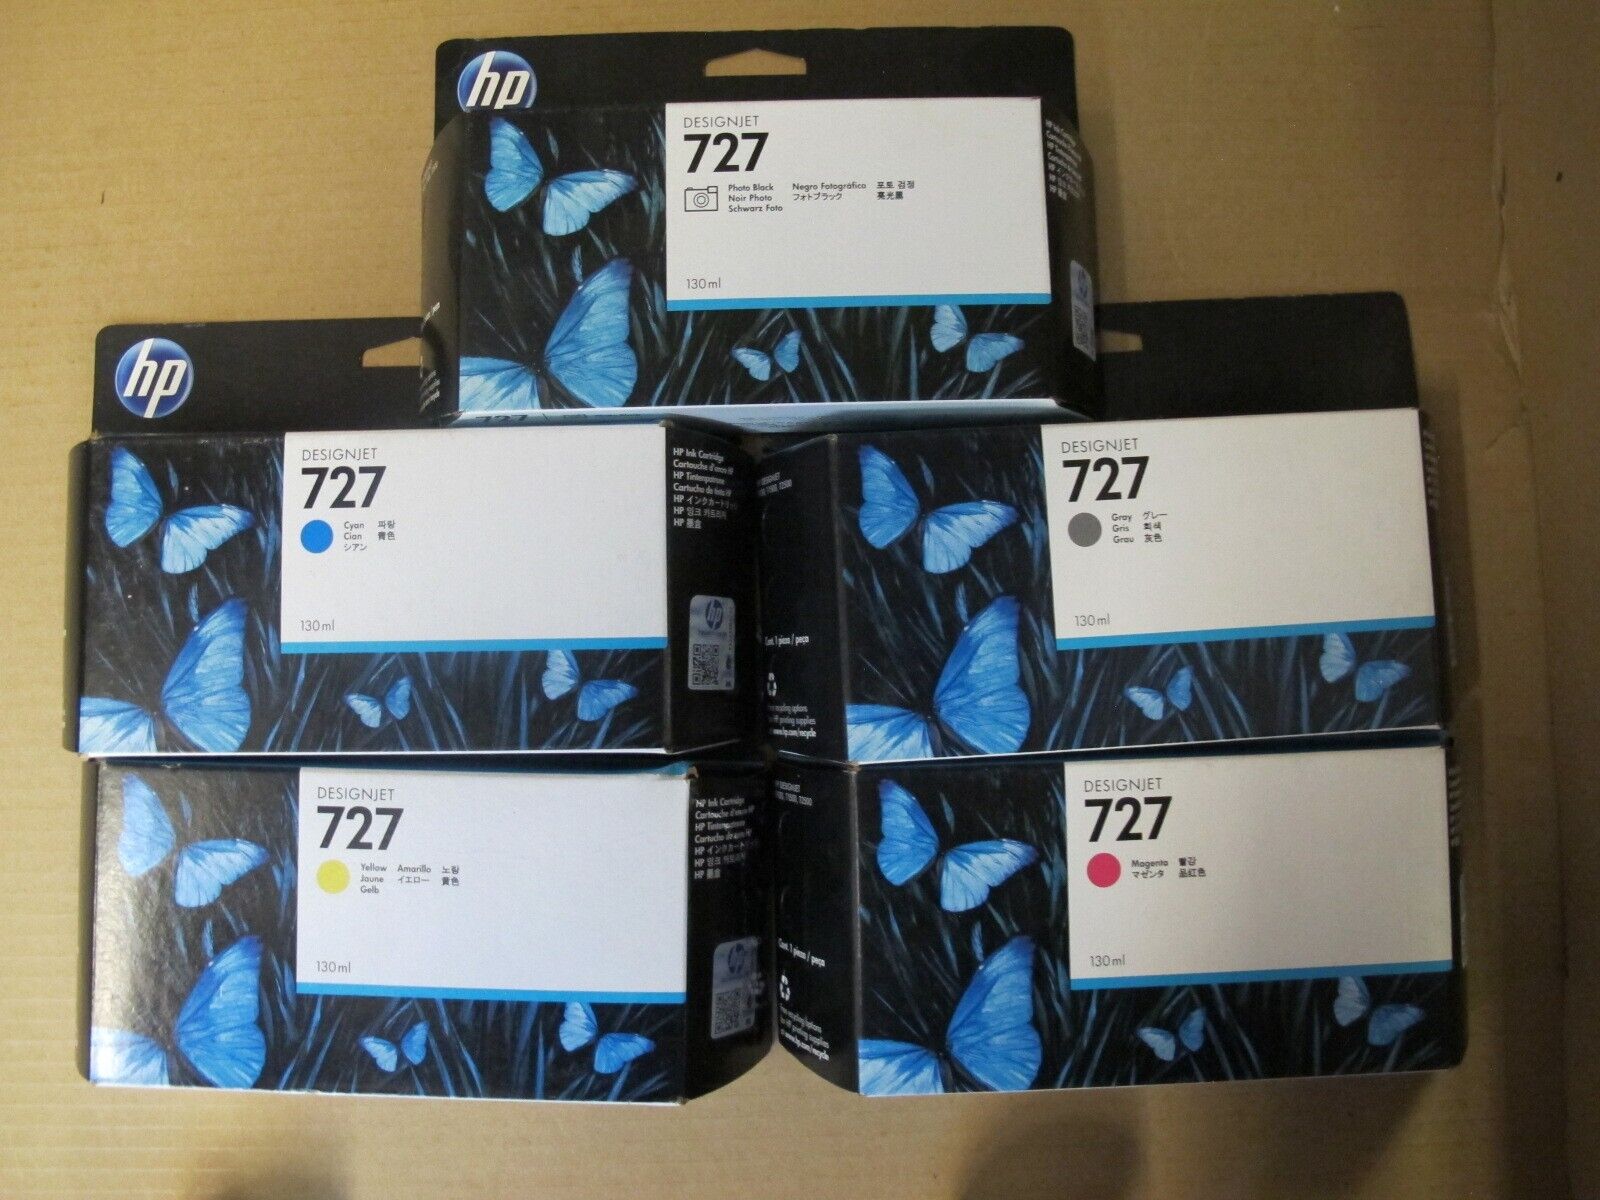 Lot of 5 Genuine HP DesignJet 727 Ink Cartridges 130ML EXP:2020, Full Set Sealed